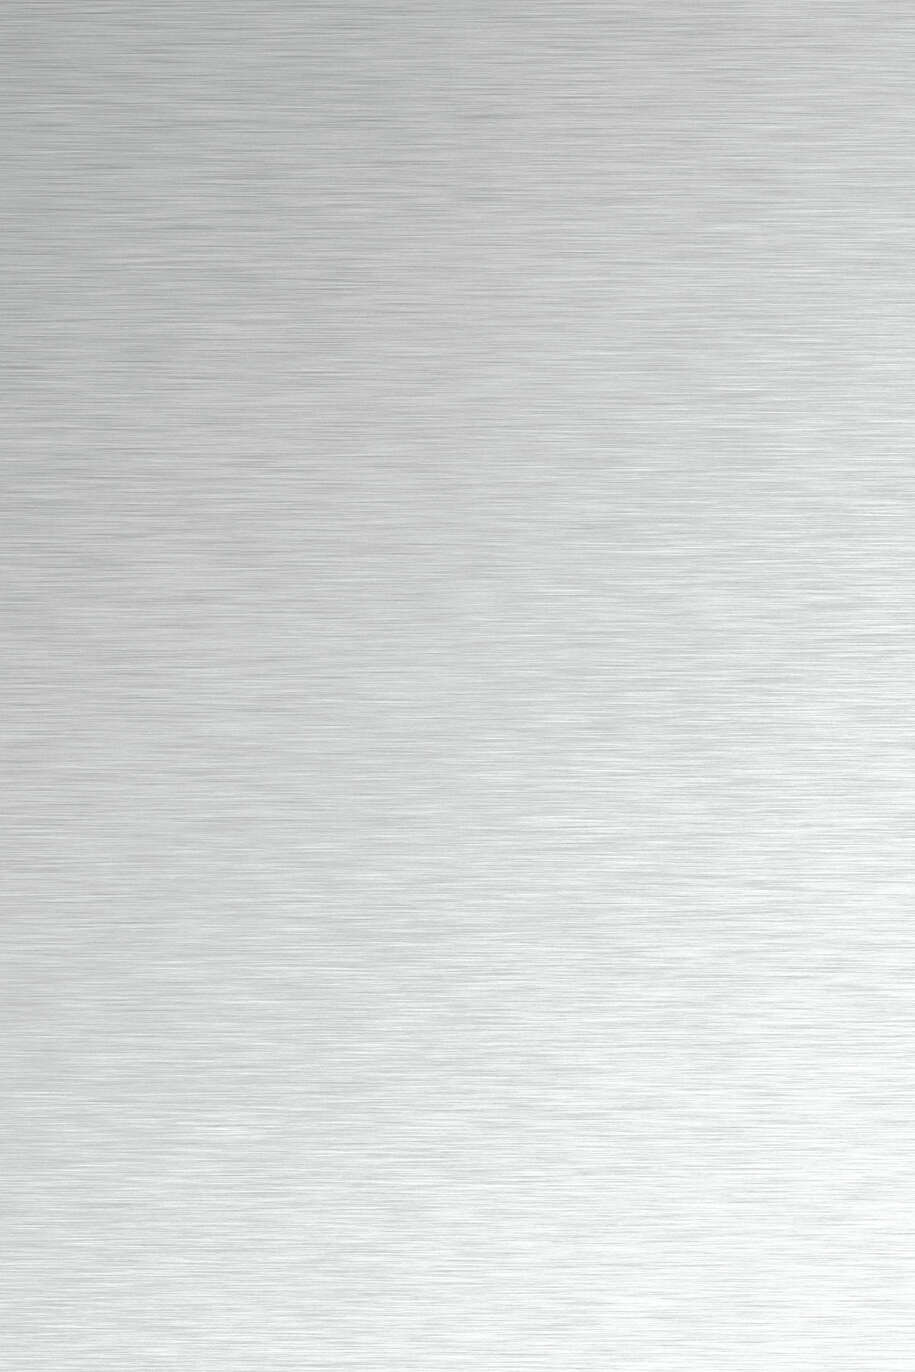 Metal AL01 Brushed Aluminium 18,7 x 1300 x 2800 mm